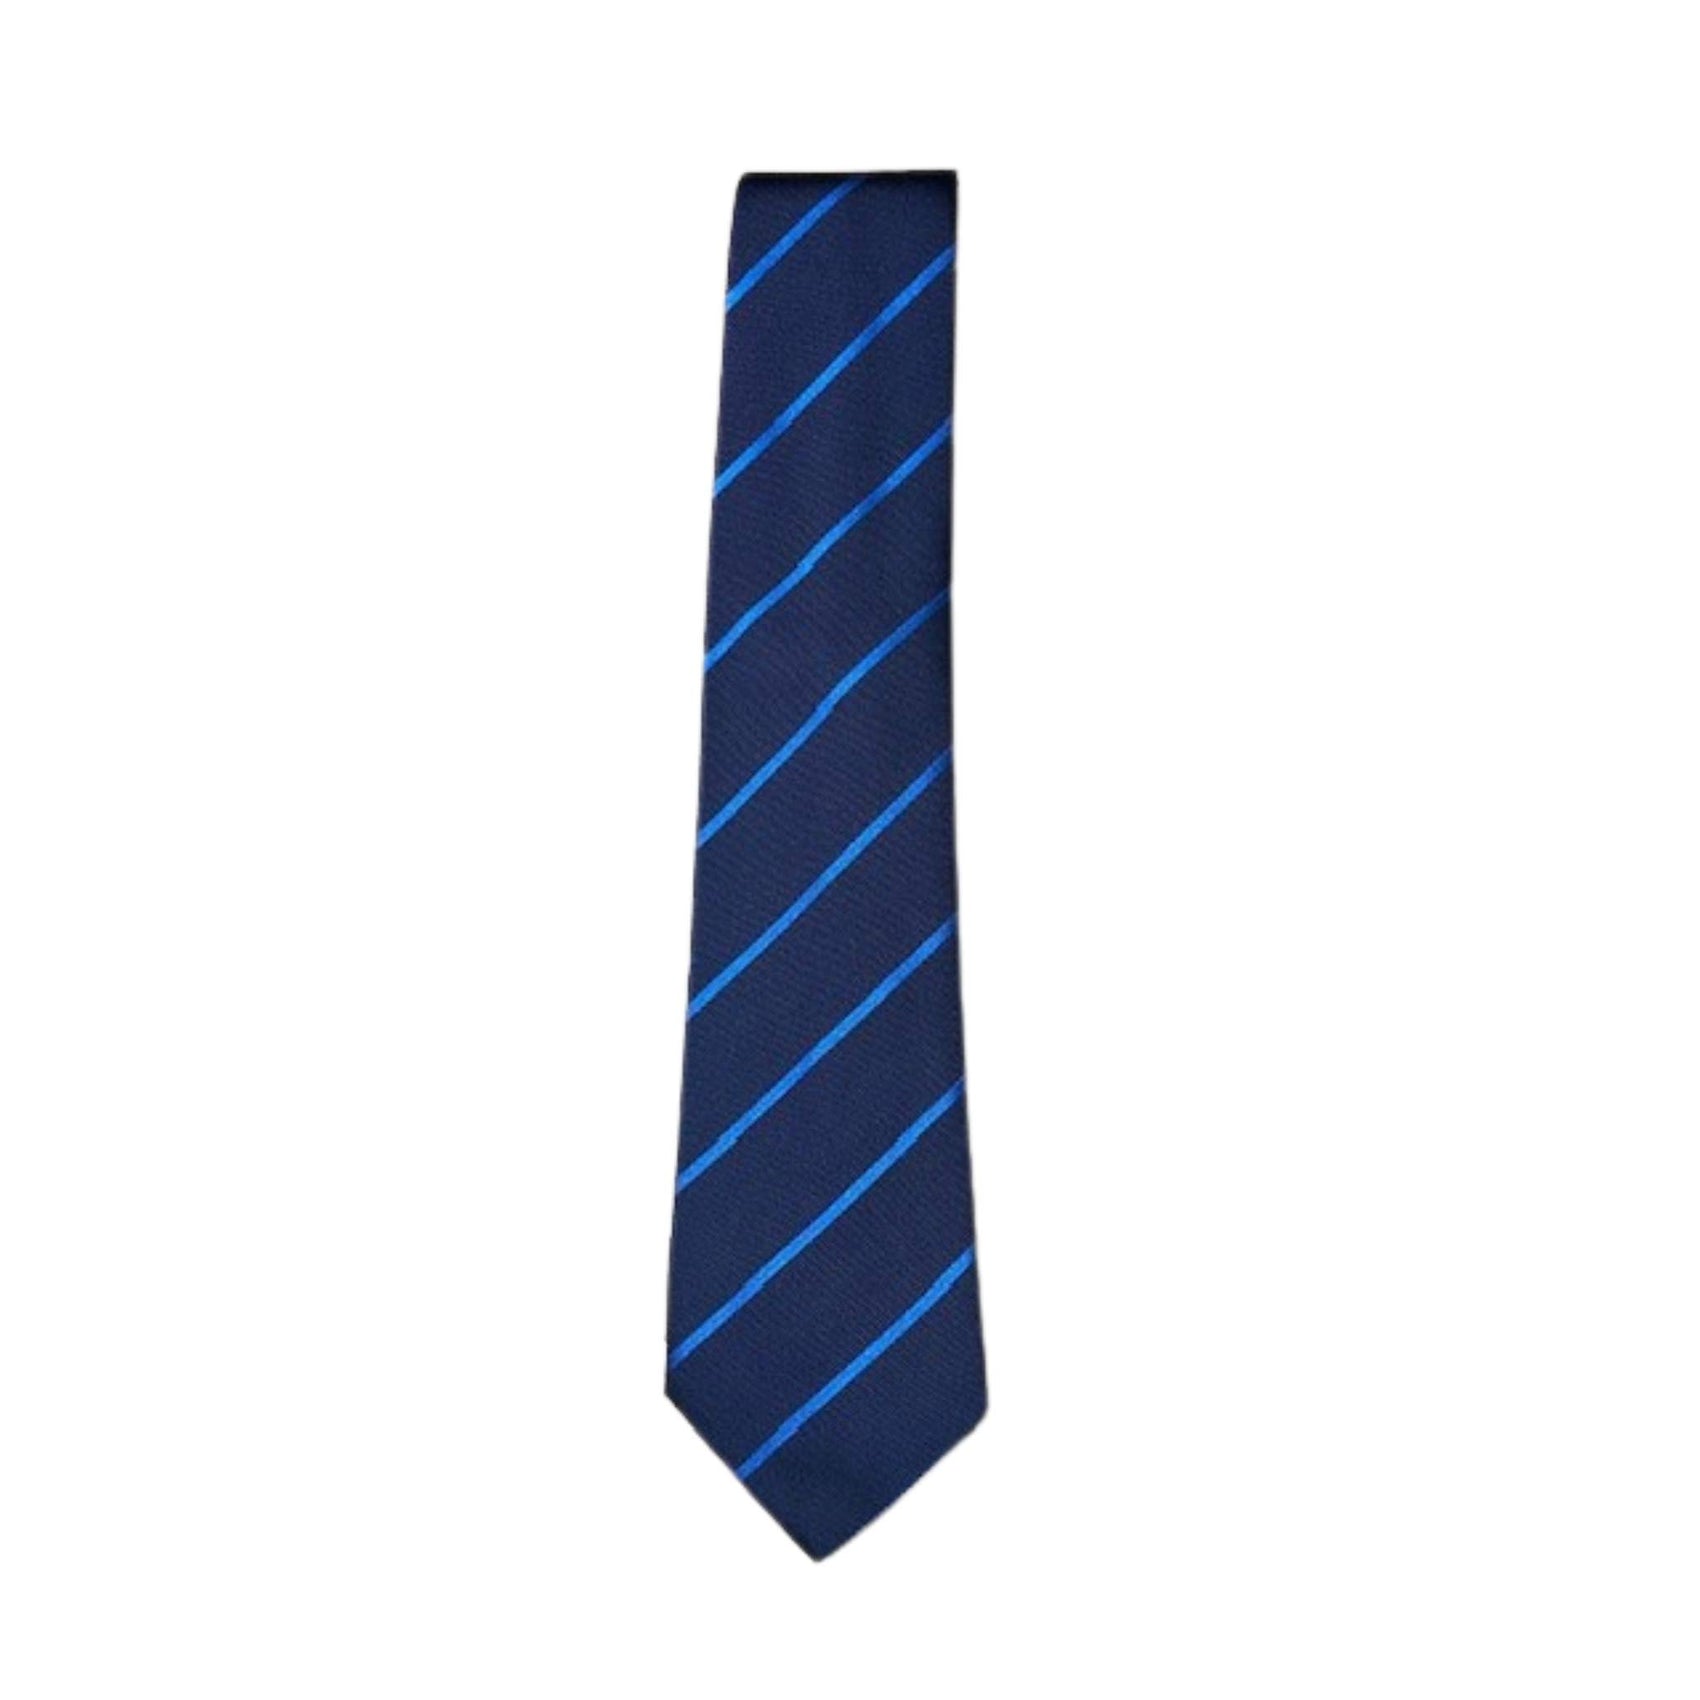 Navy and light Blue stripe tie